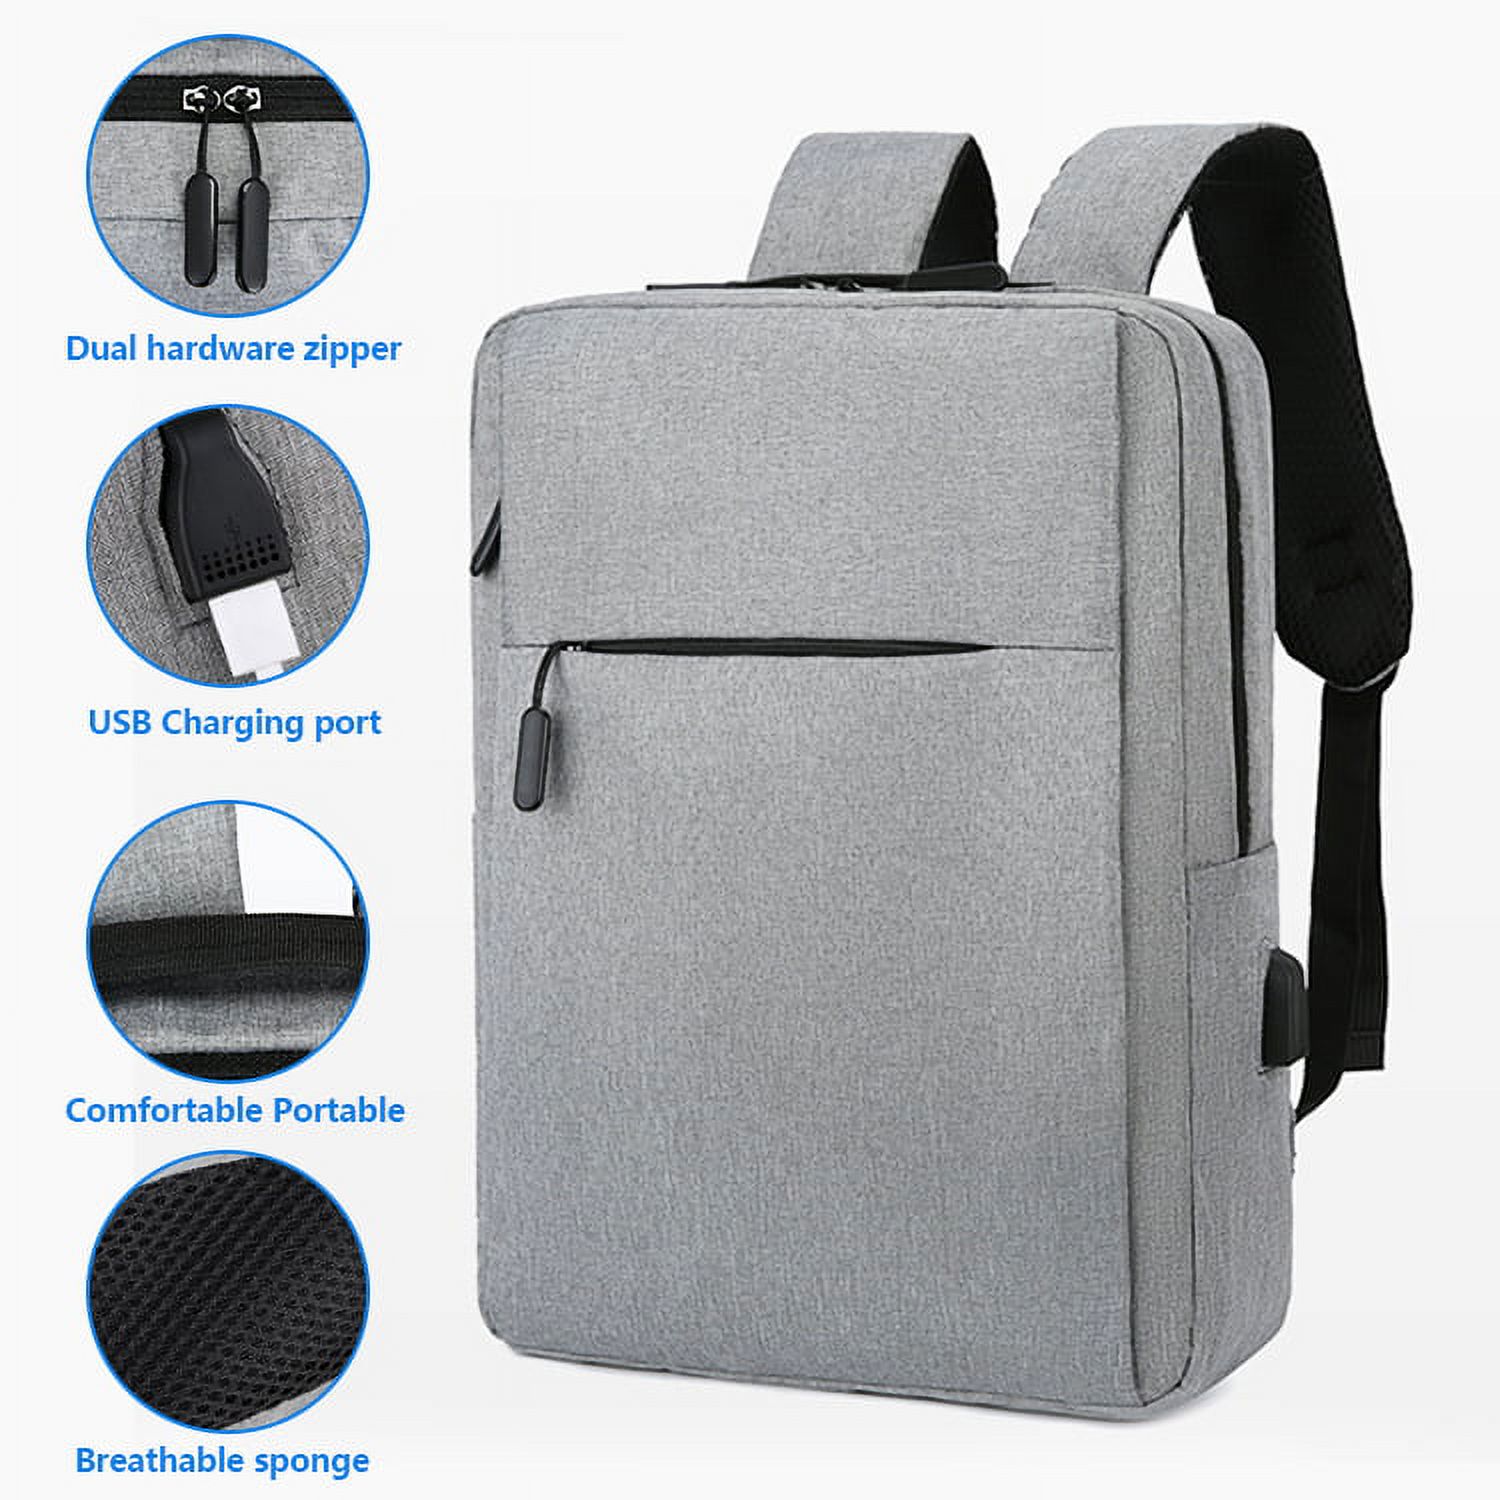 Novaa Bags 16" Slim Casual Waterproof Laptop Backpack with USB Charging Port Gray - image 2 of 5